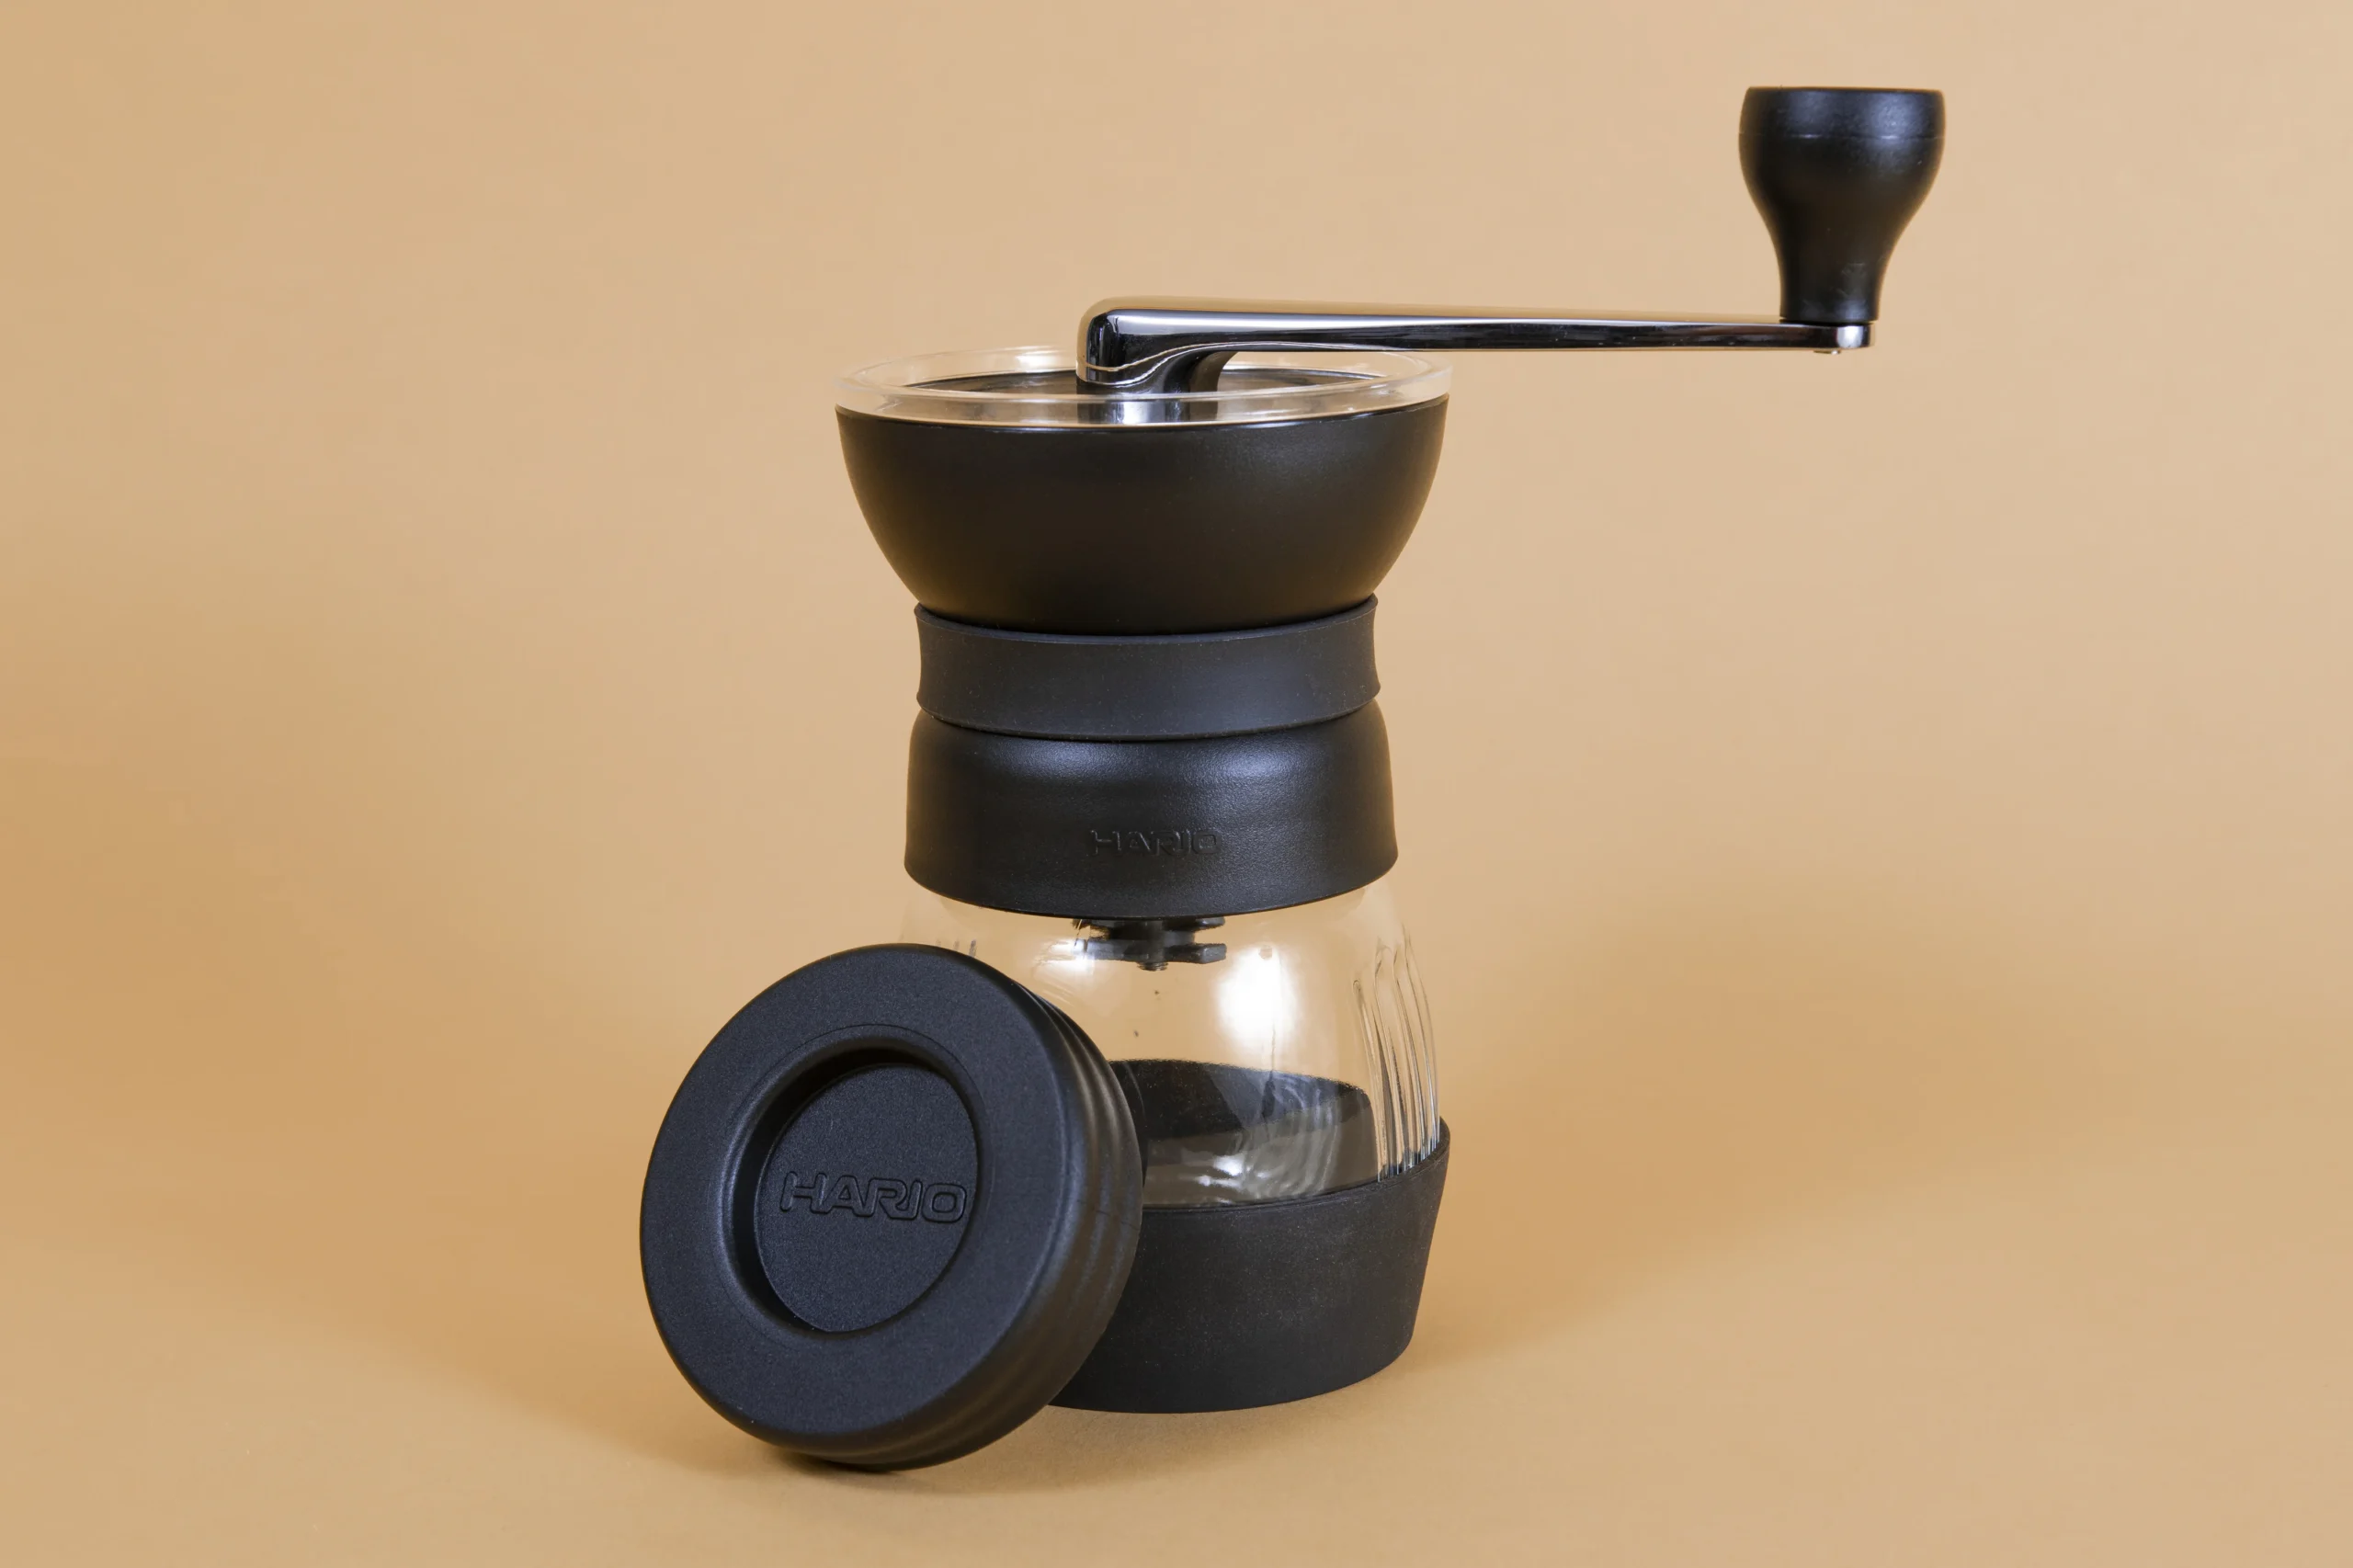 Best Coffee Grinder for Espresso: Hario Skerton Pro